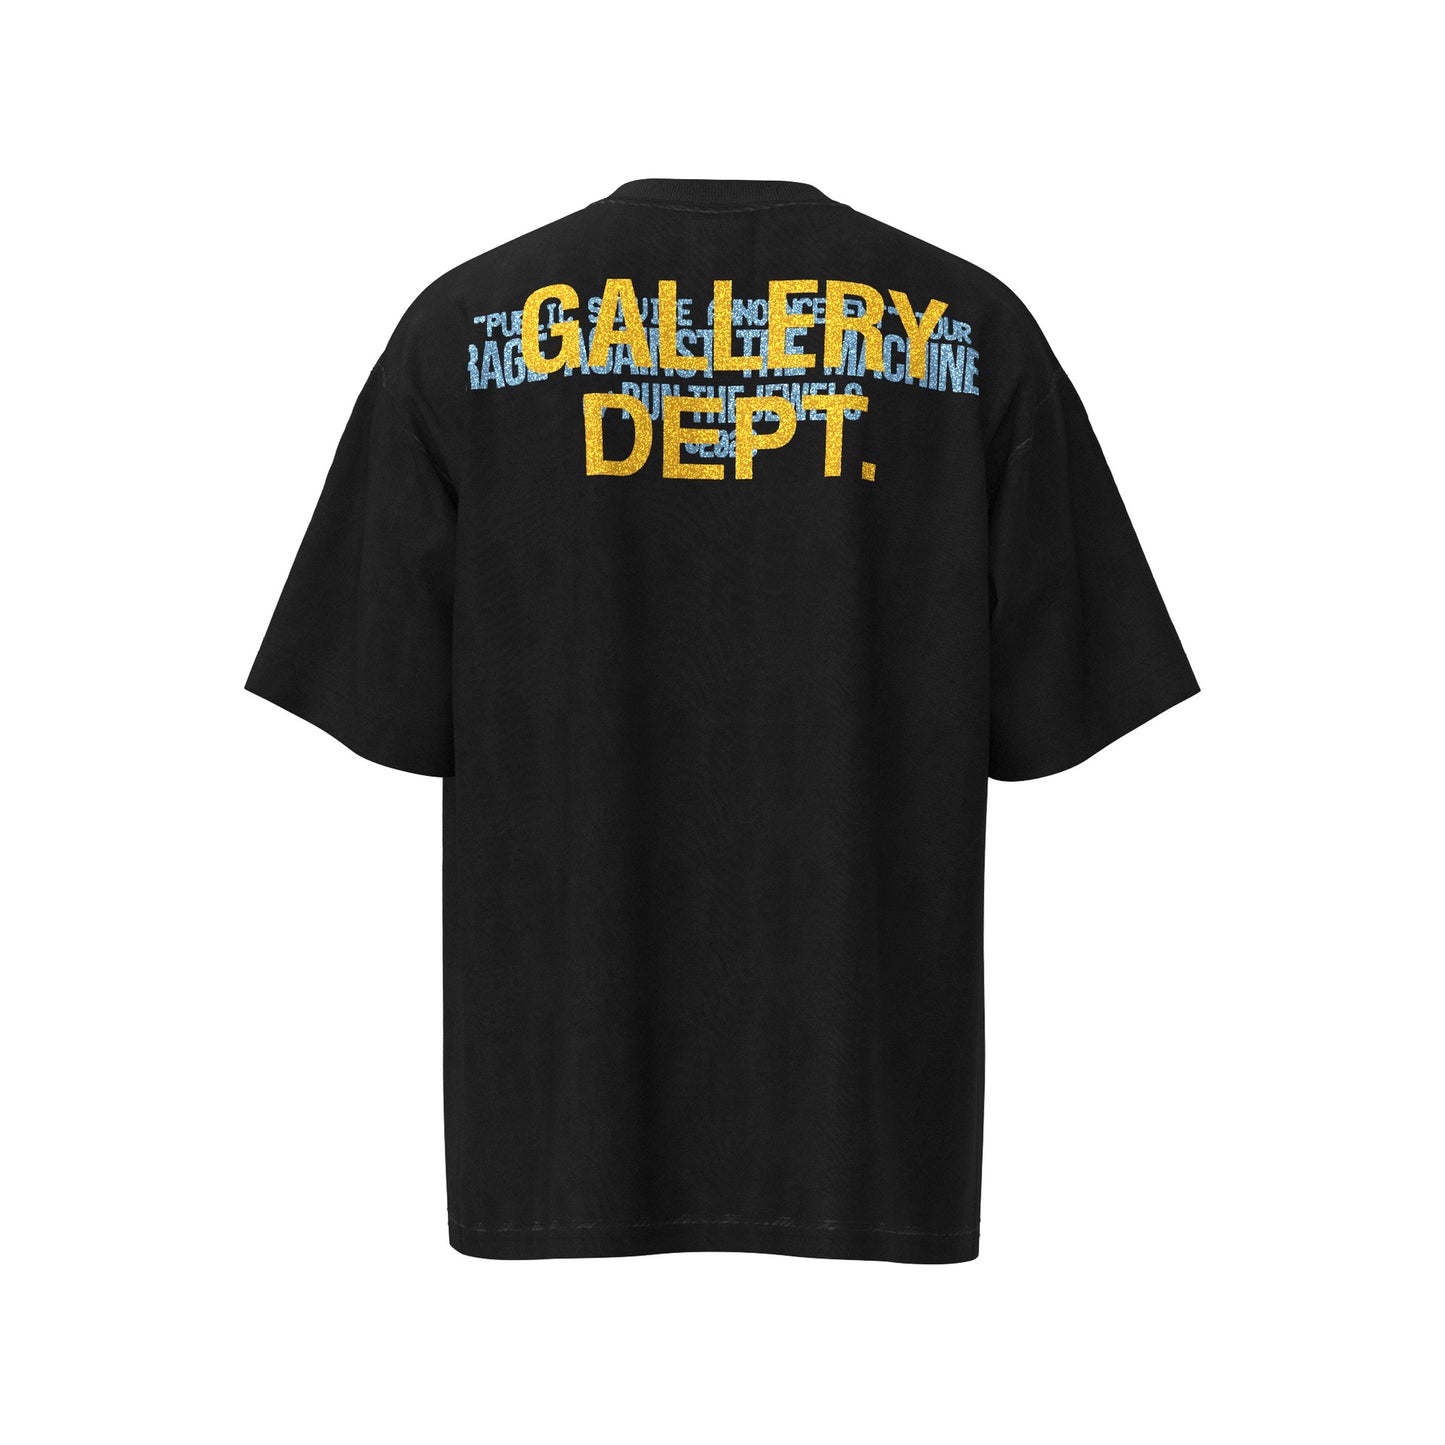 CASADEPT-Gallery Dept T-Shirt